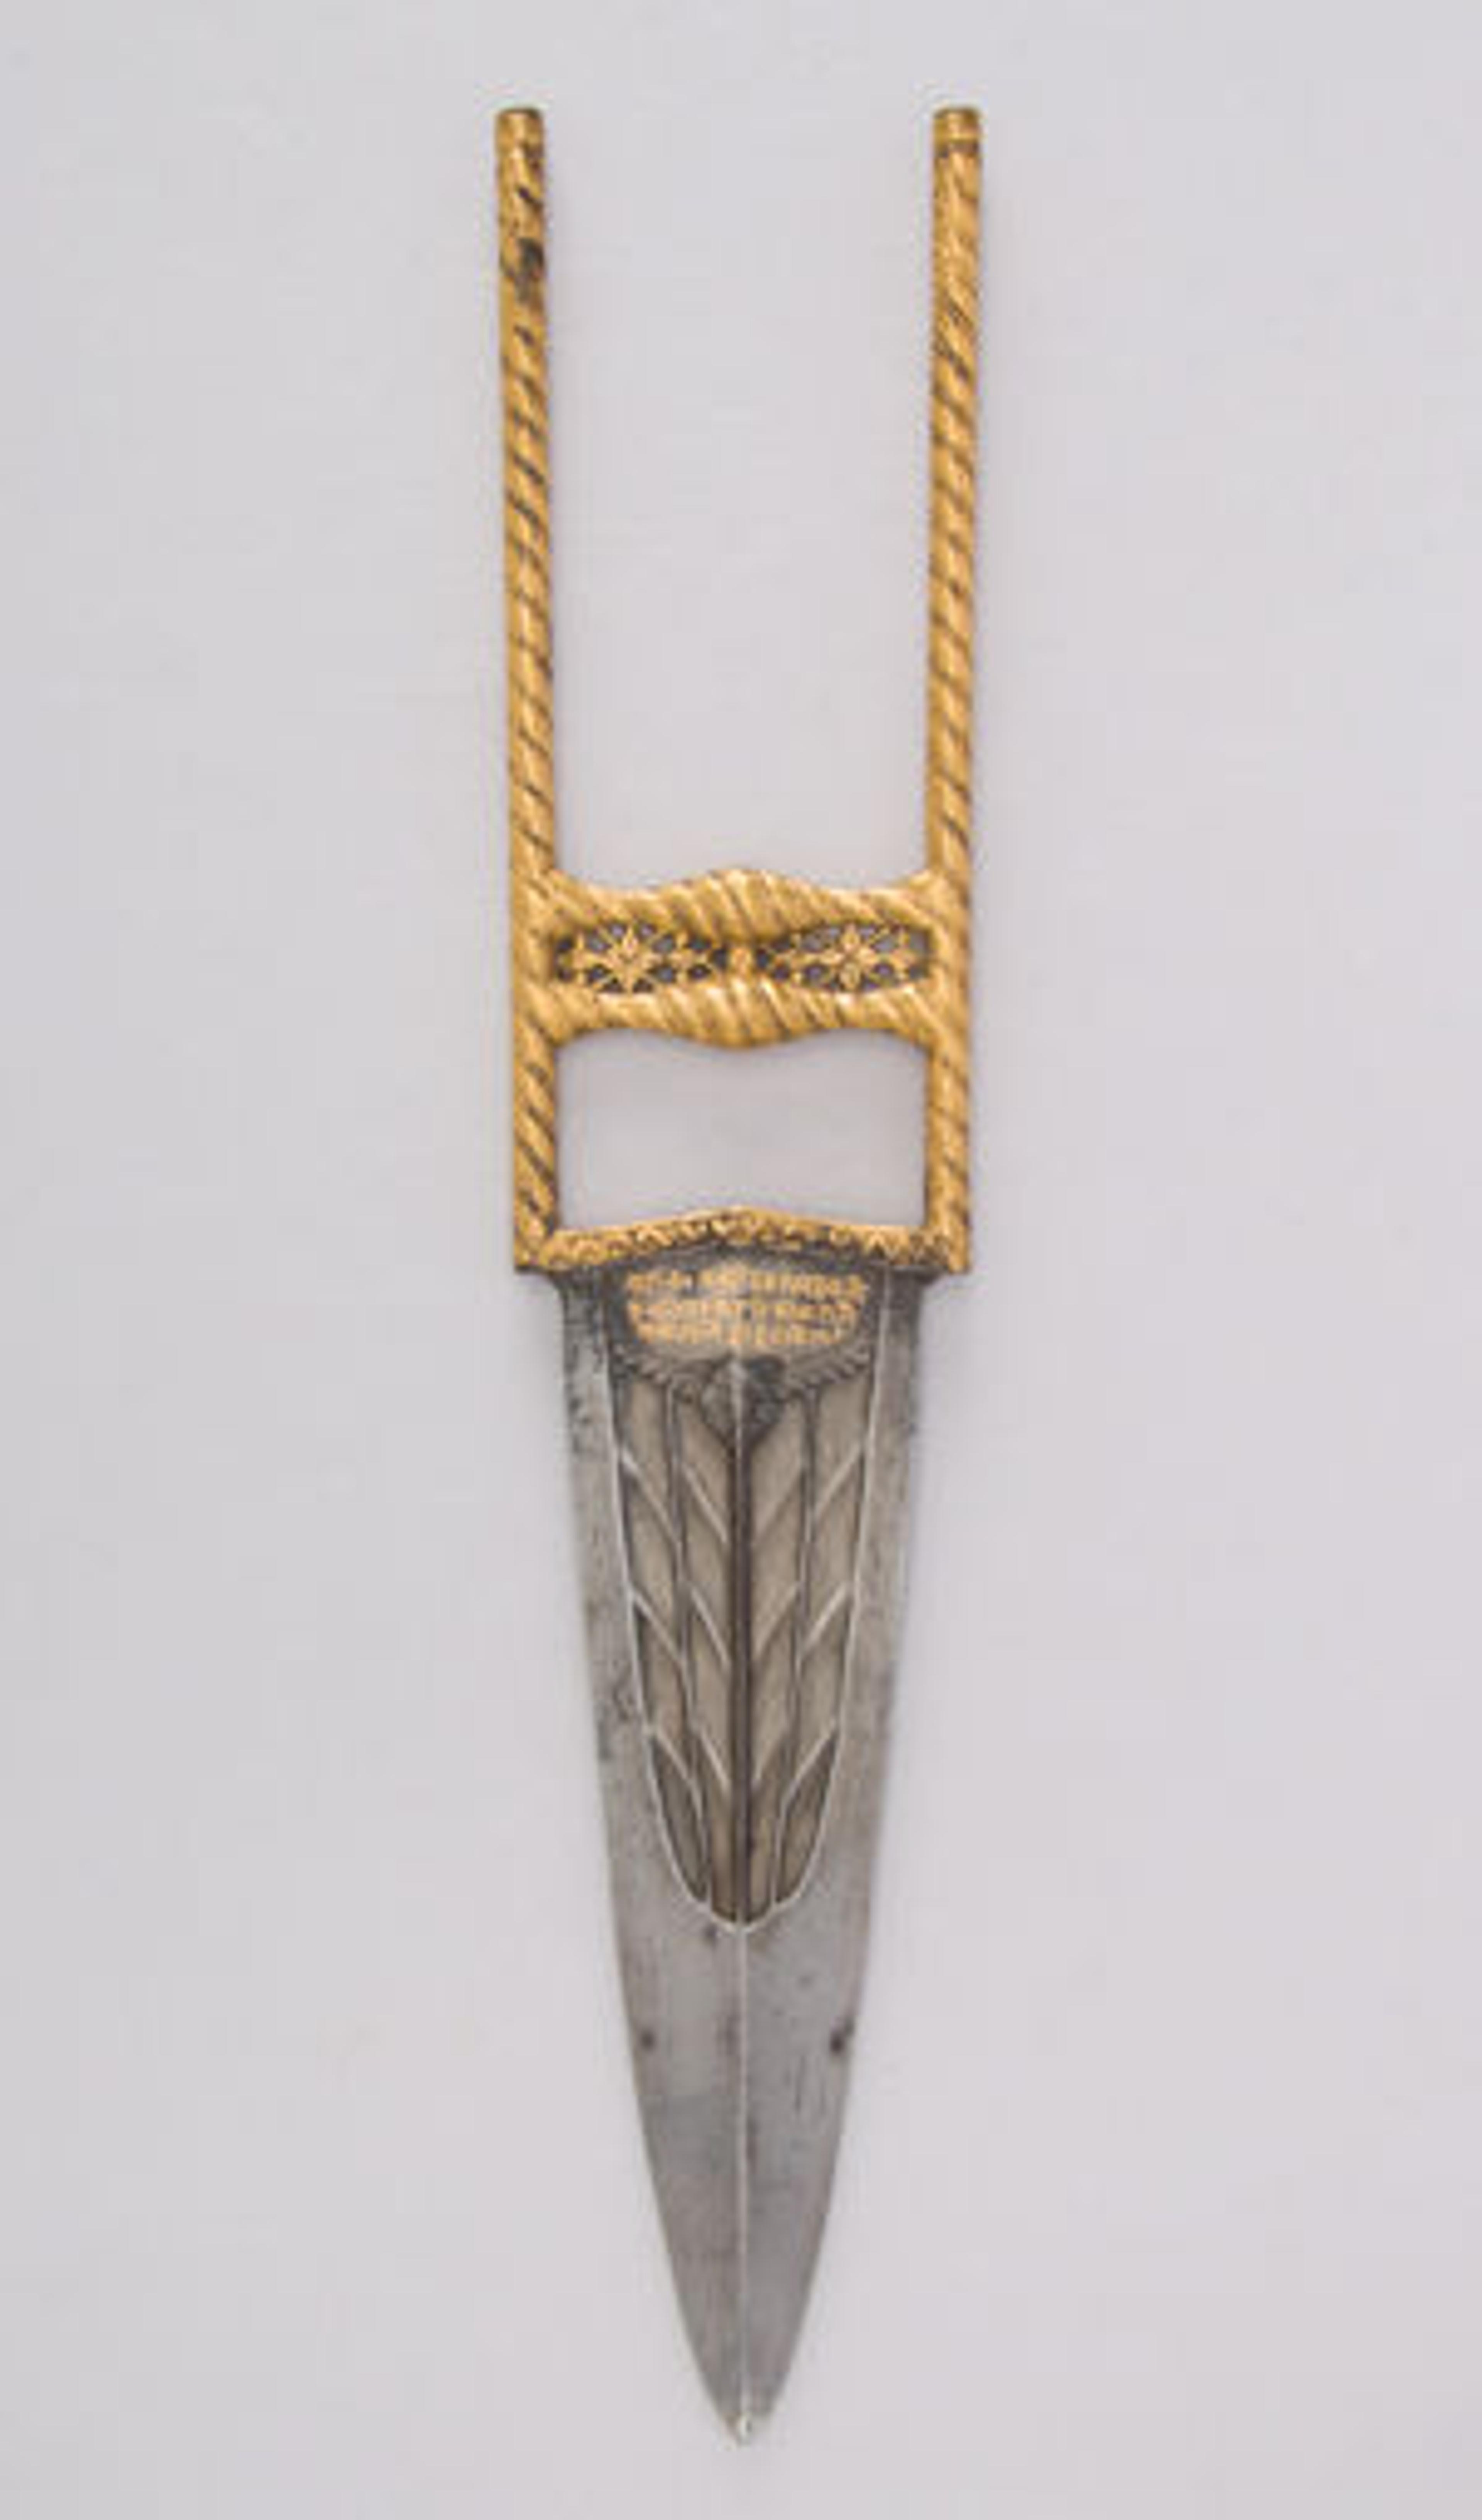 Left: Dagger (Katar), 1852. India, Bundi, Rajasthan. Steel, gold; 17 1/2 x 3 9/16 in. (44.5 x 9 cm). The Metropolitan Museum of Art, New York, Bequest of George C. Stone, 1935 (36.25.912)